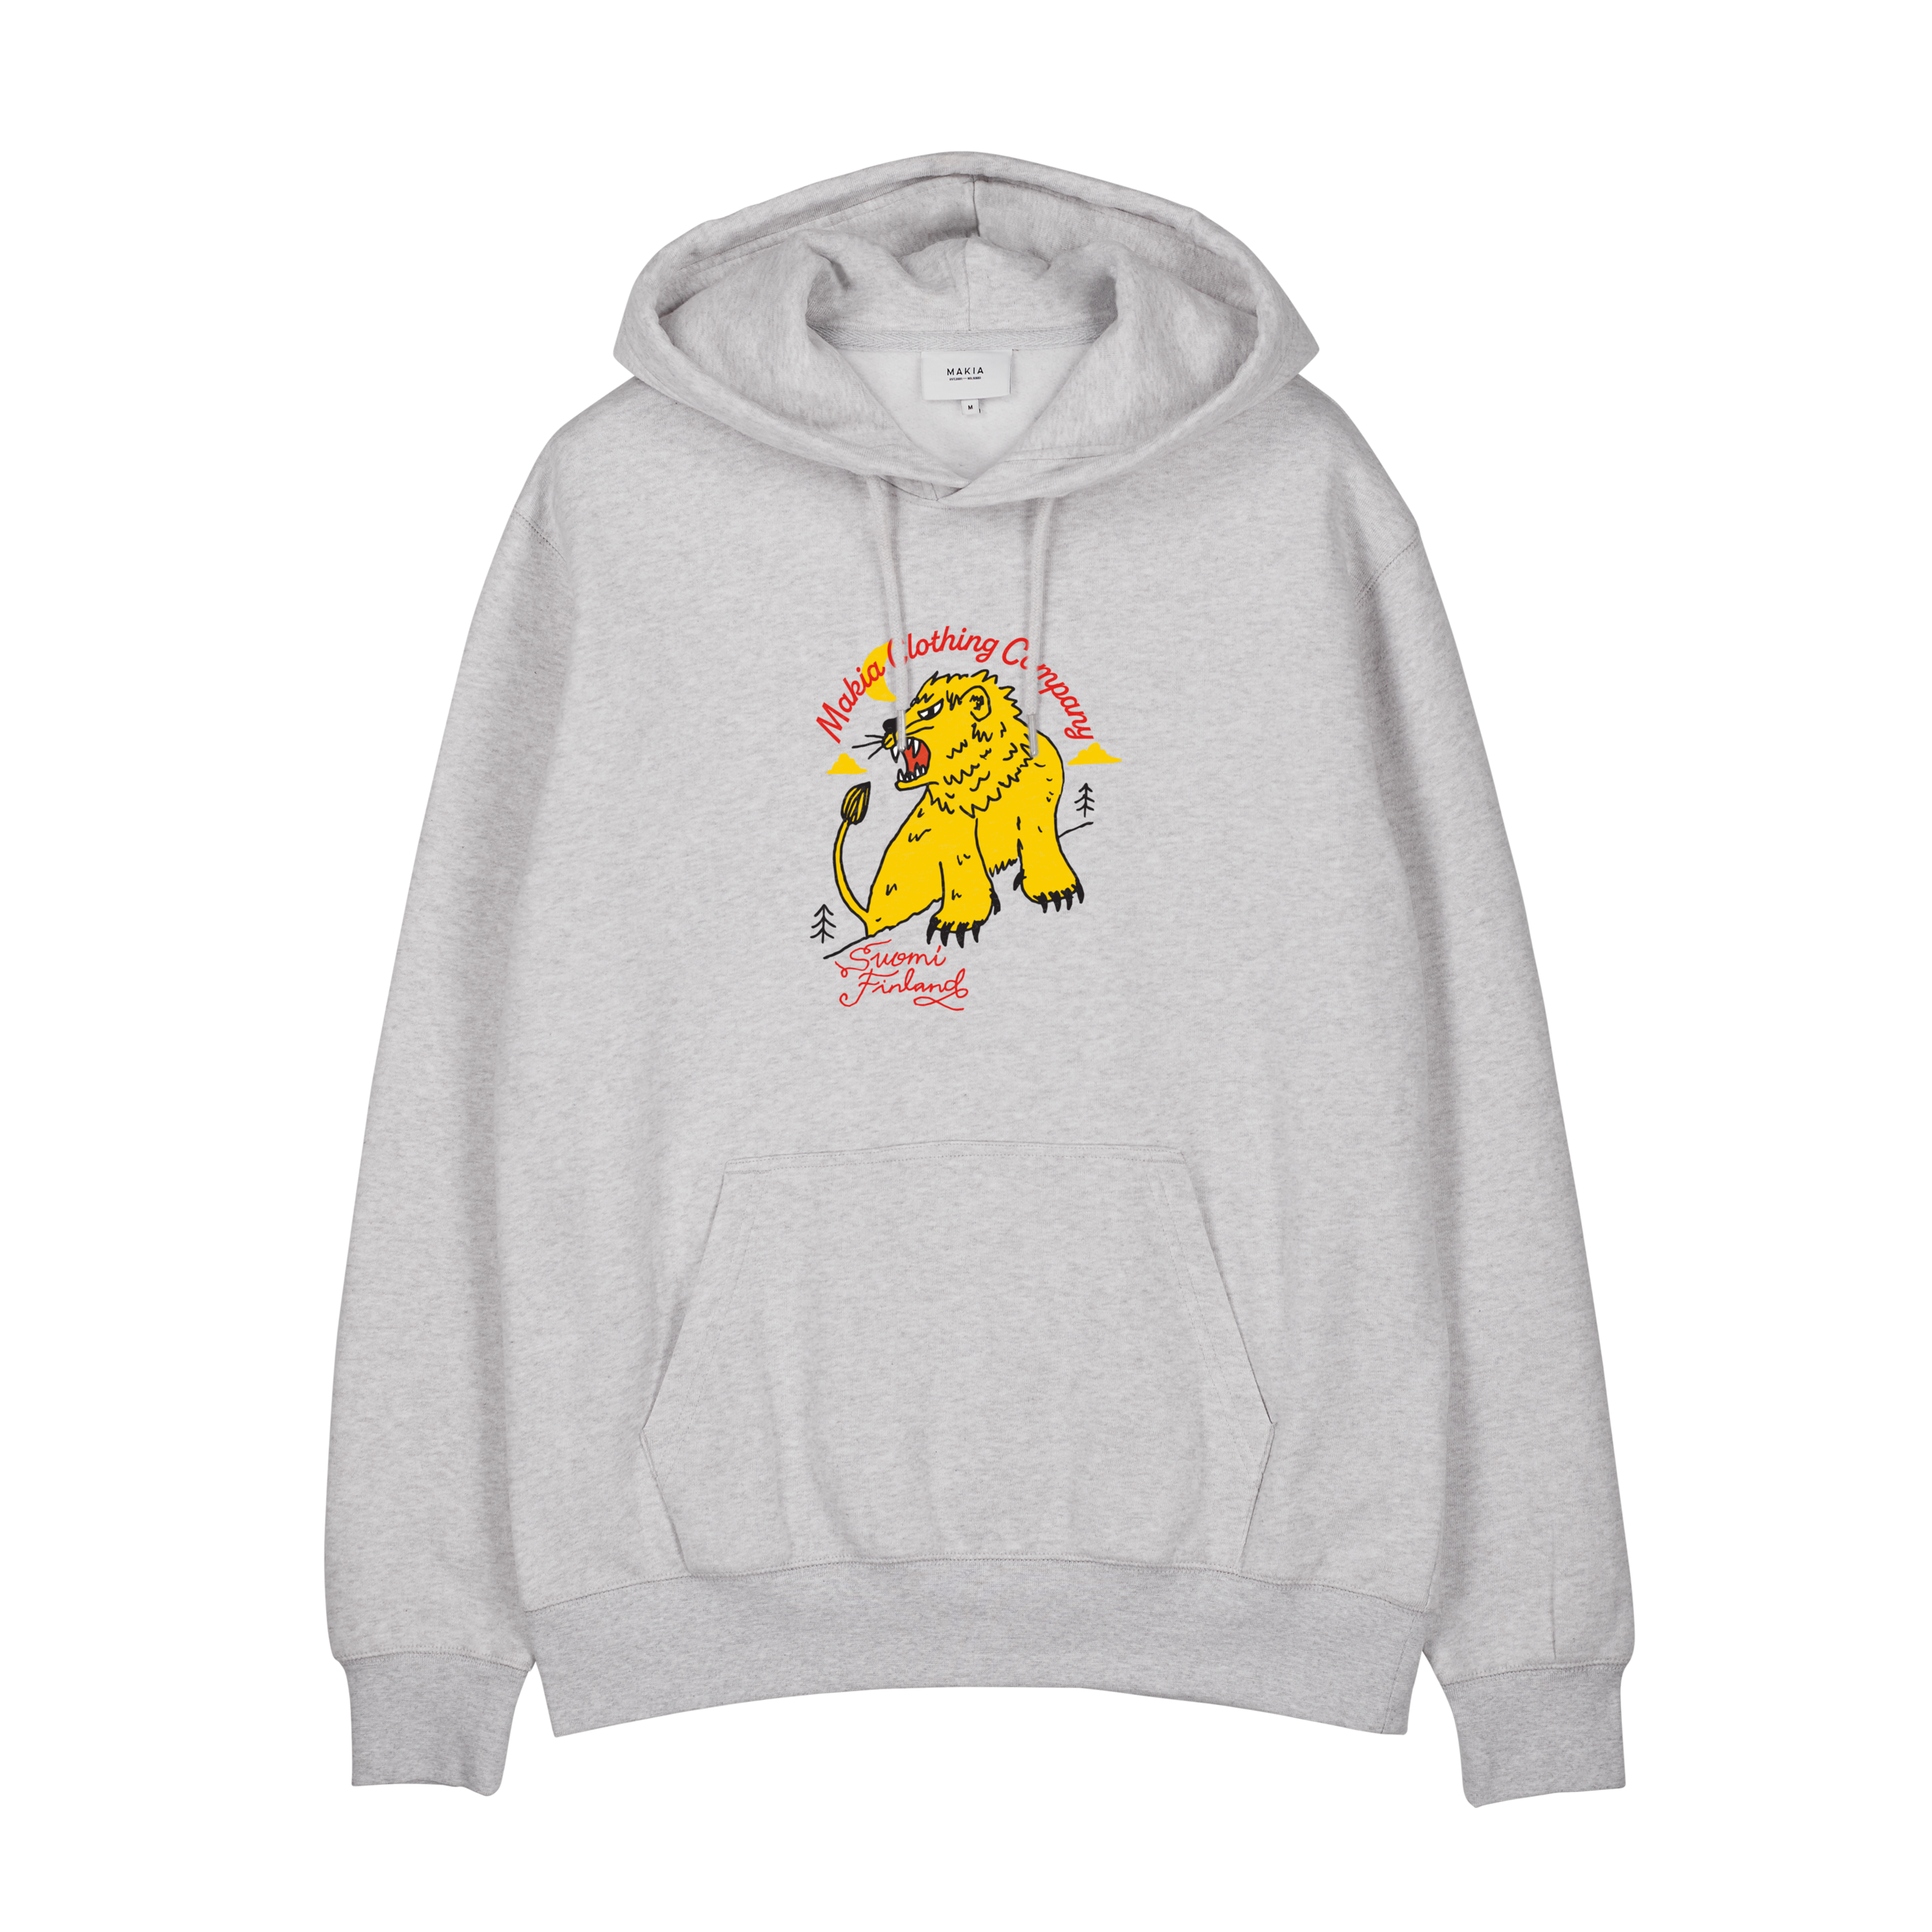 Lion Hooded Sweatshirt